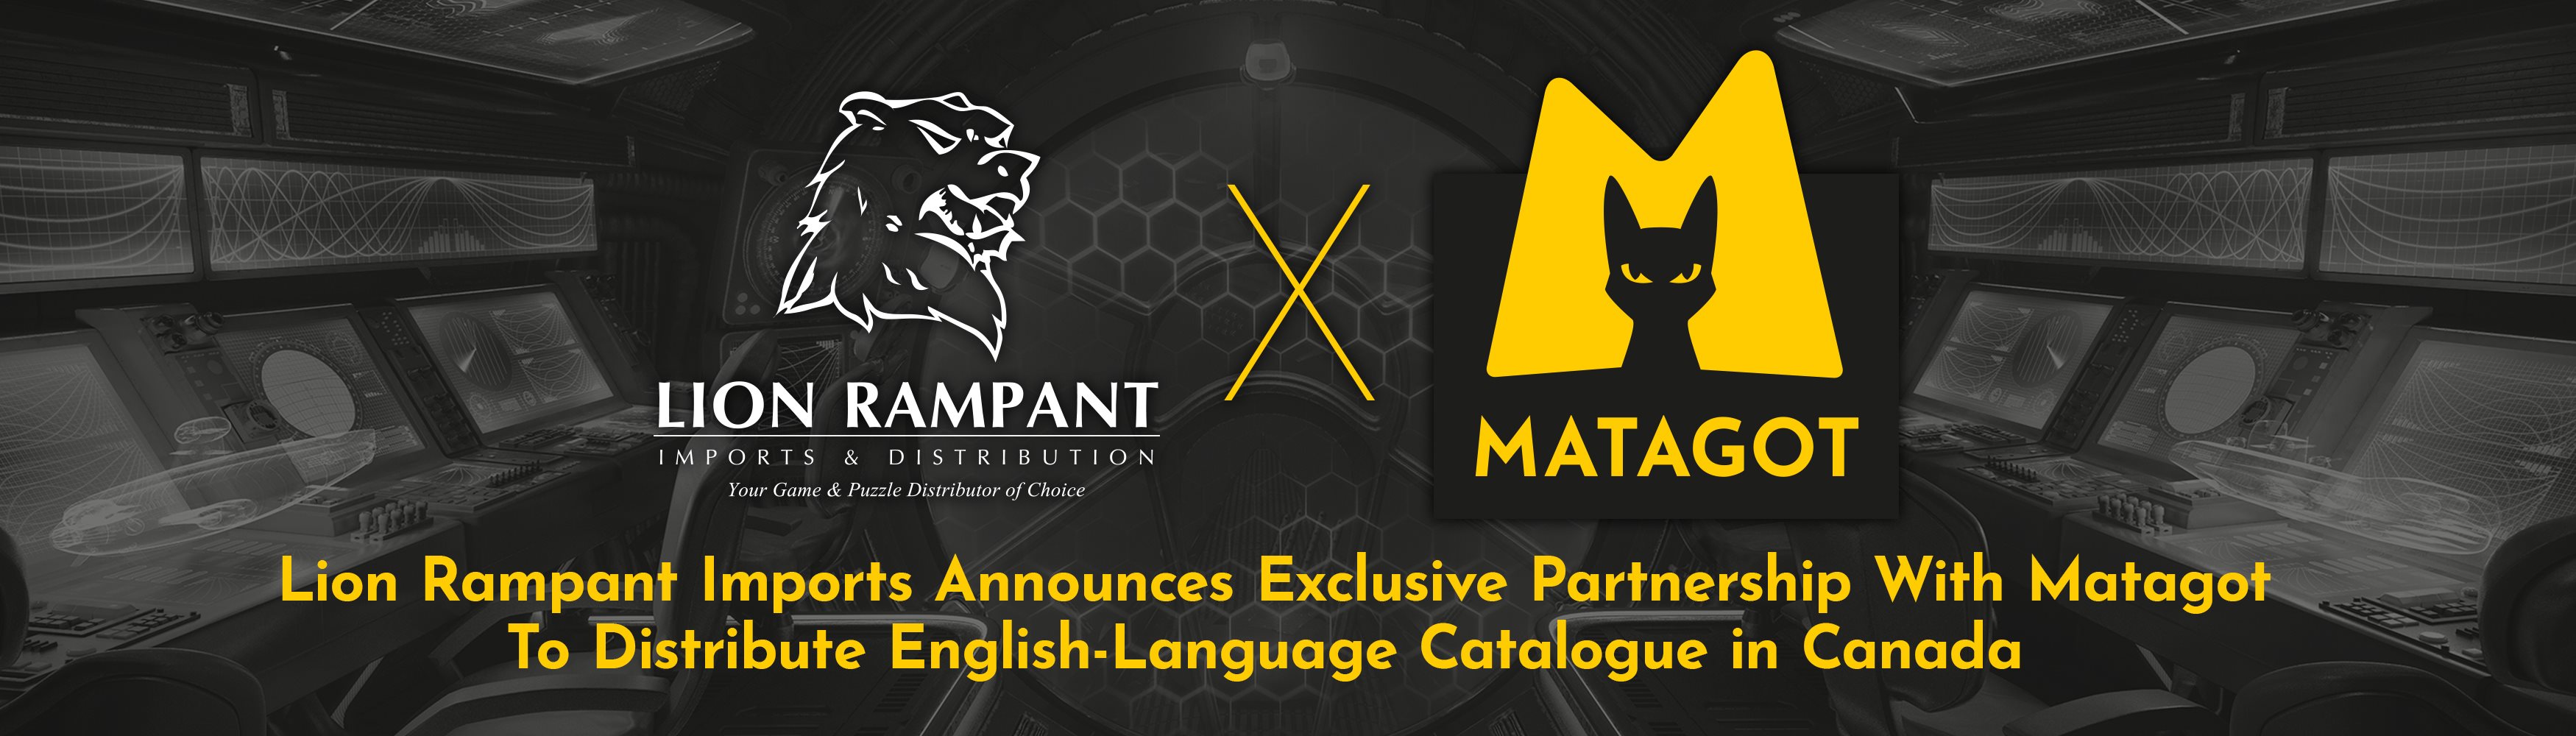 Lion Rampant Imports Announces Exclusive Partnership With Matagot